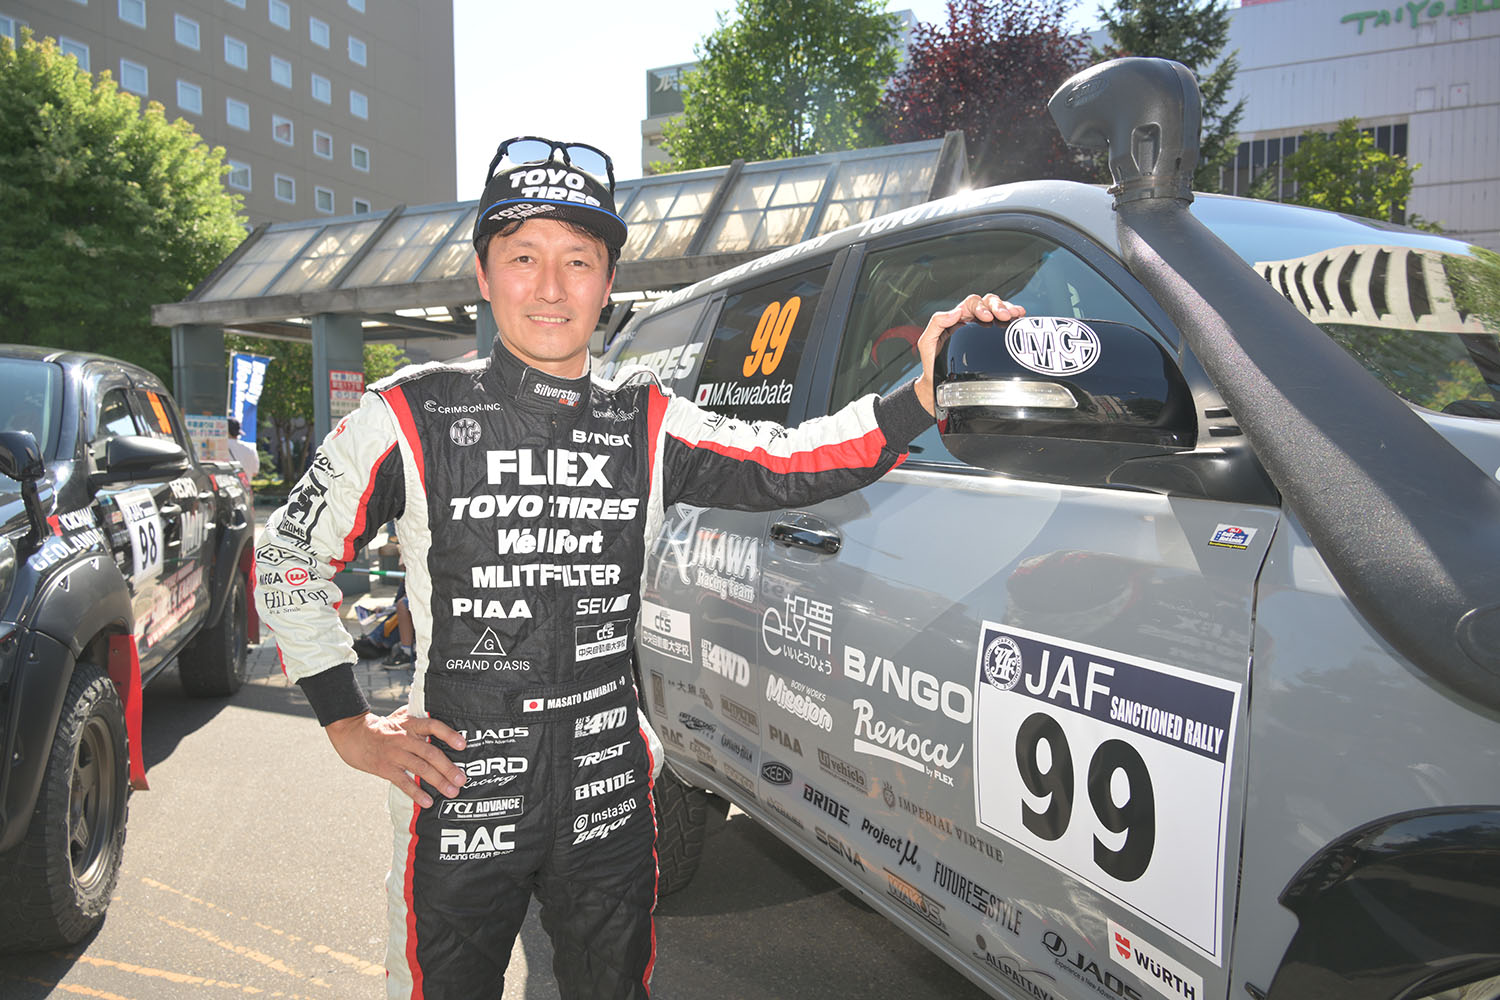 FLEX SHOWAIKAWA Racing with TOYO TIRESの川畑選手の写真